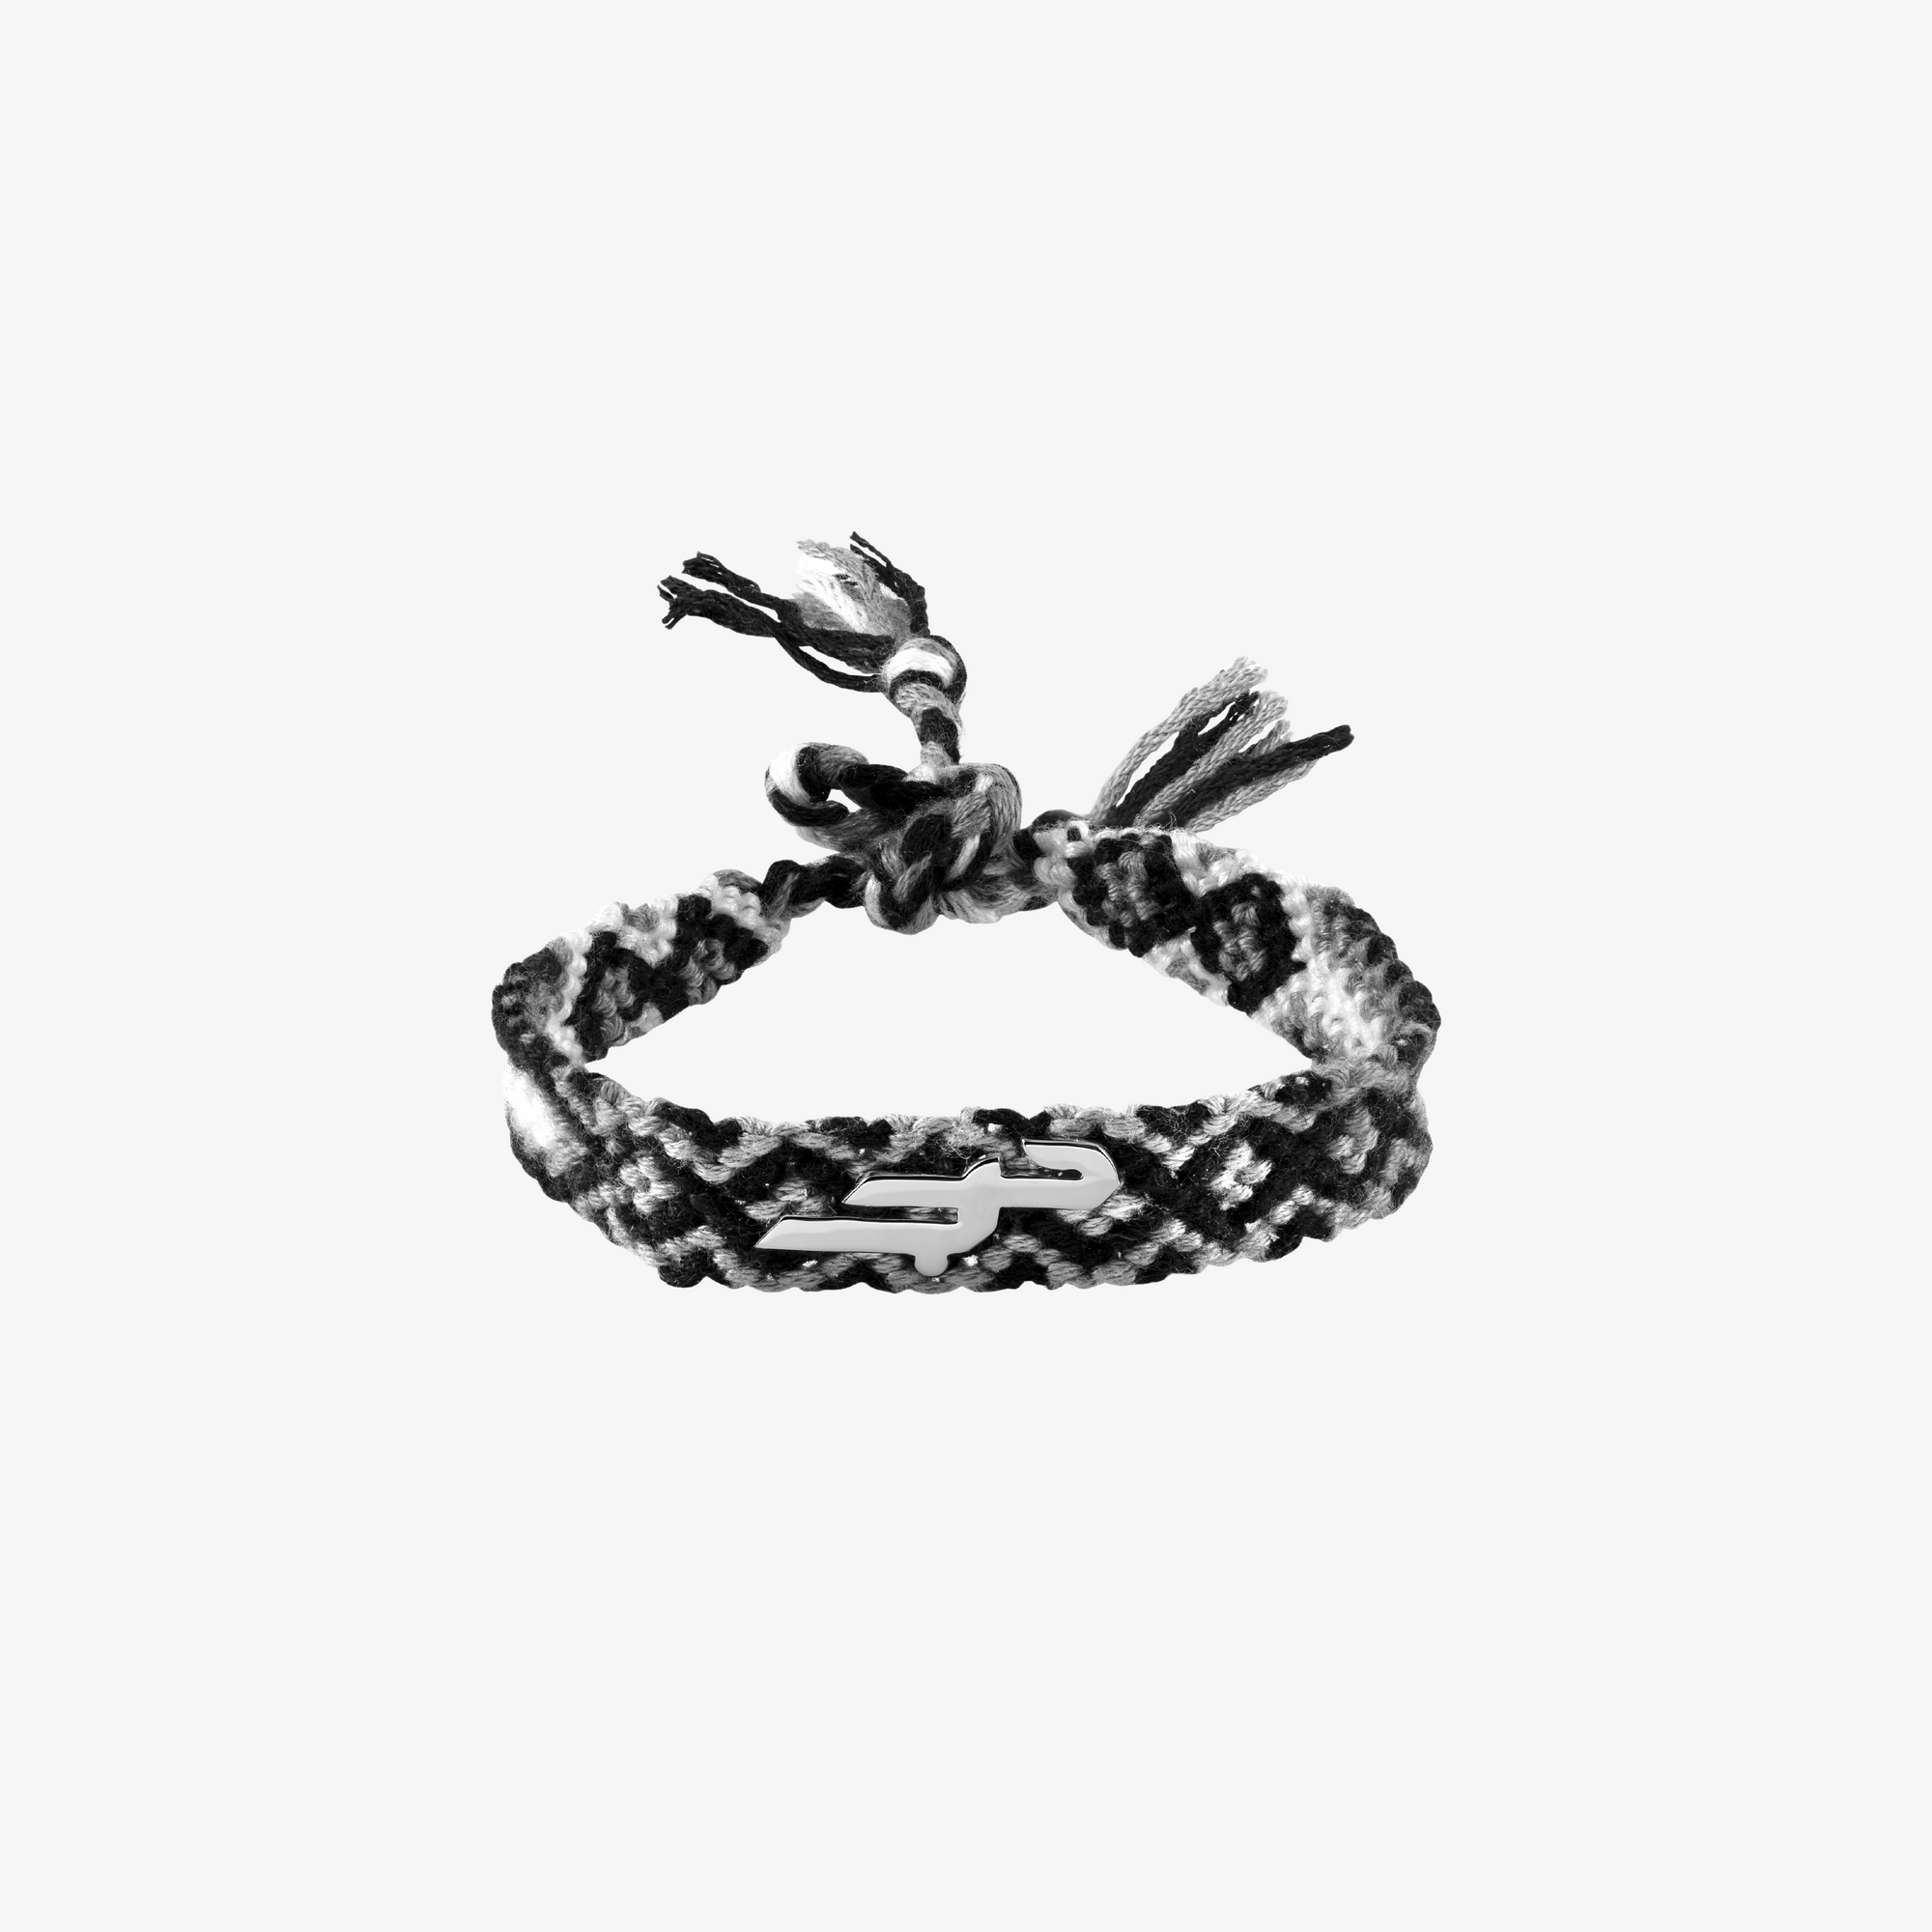 SILVER - Silver "Love" Fabric Bracelet